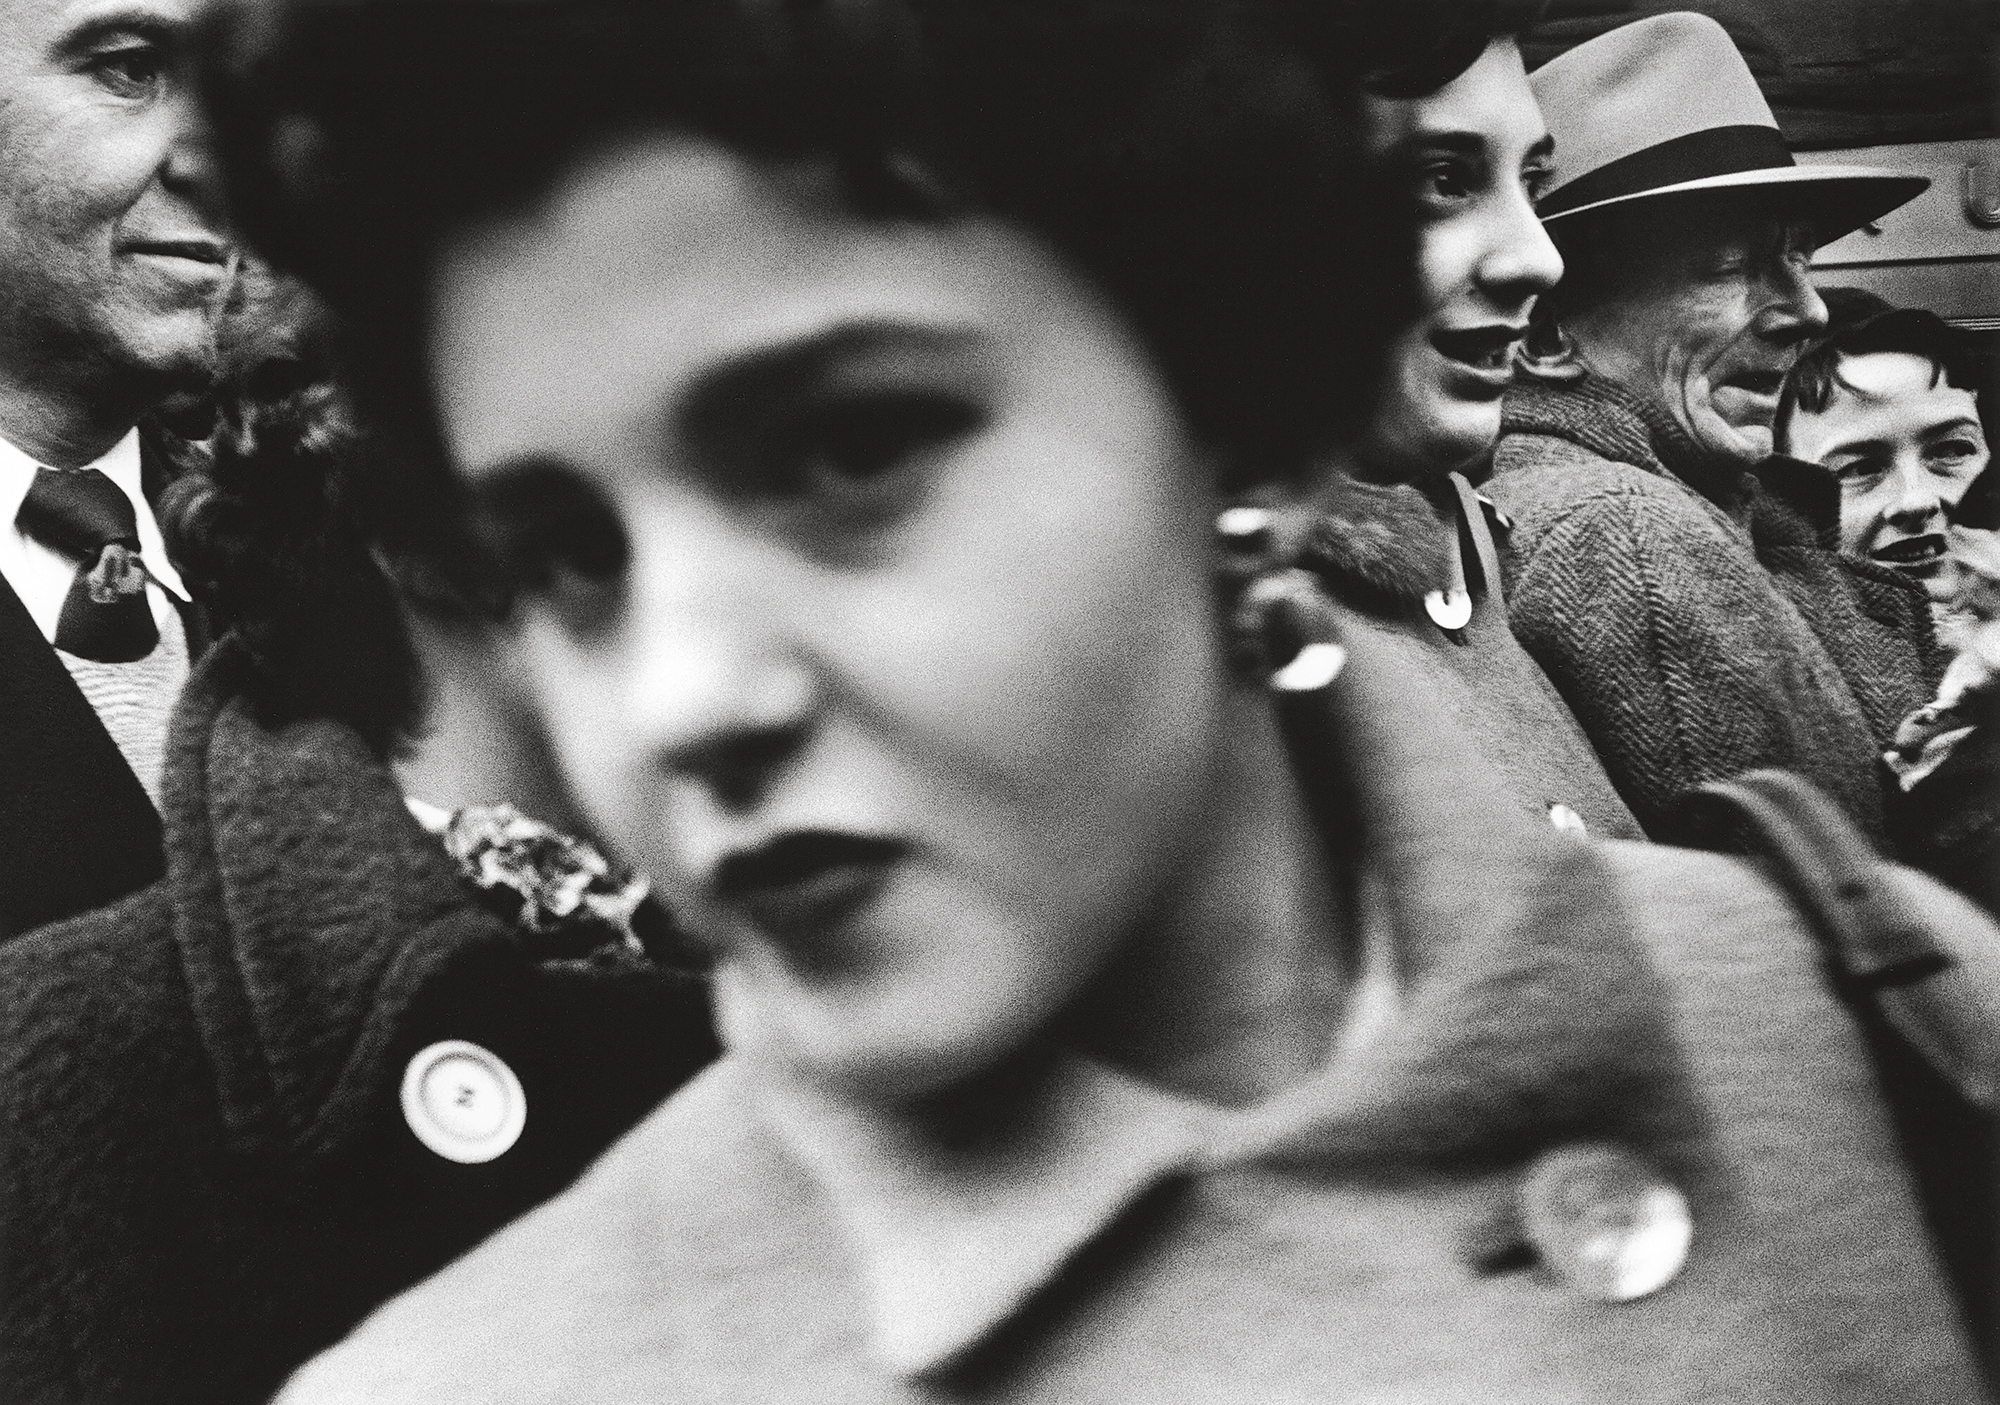 William Klein, <em>Big face in crowd, St. Patrick’s Day, Fifth Avenue, New York</em>, 1955″>
		</div>
		<div class=